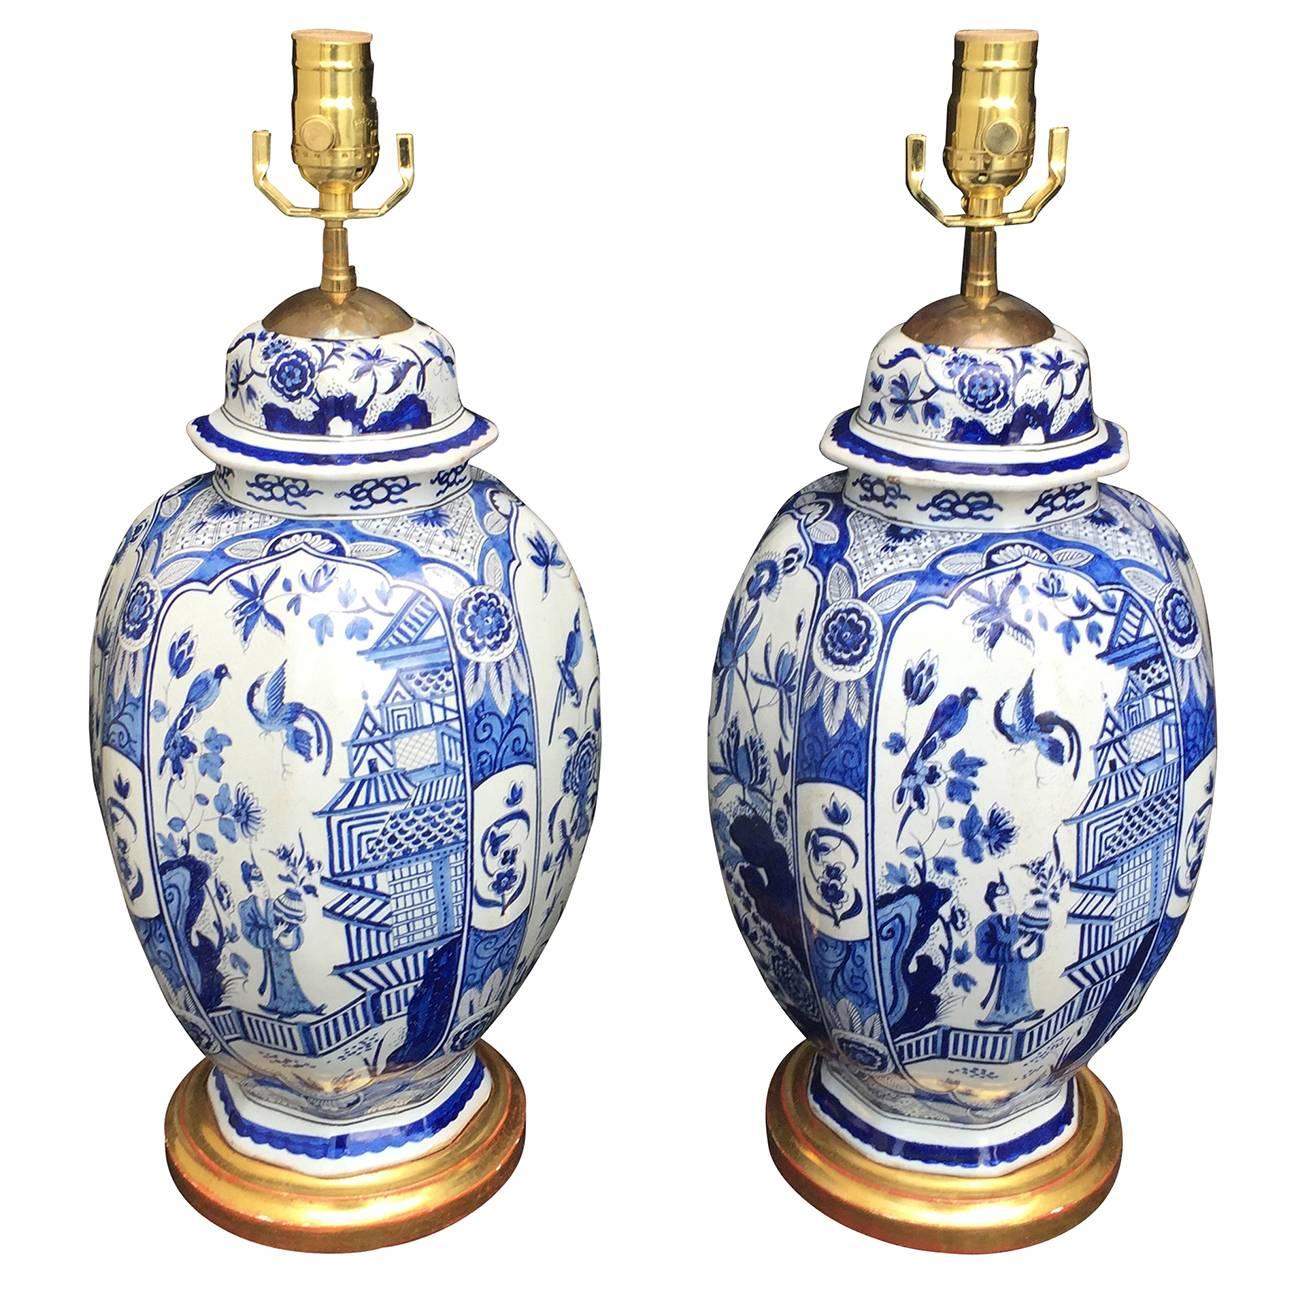 Pair of 18th Century Dutch Delft Lamps